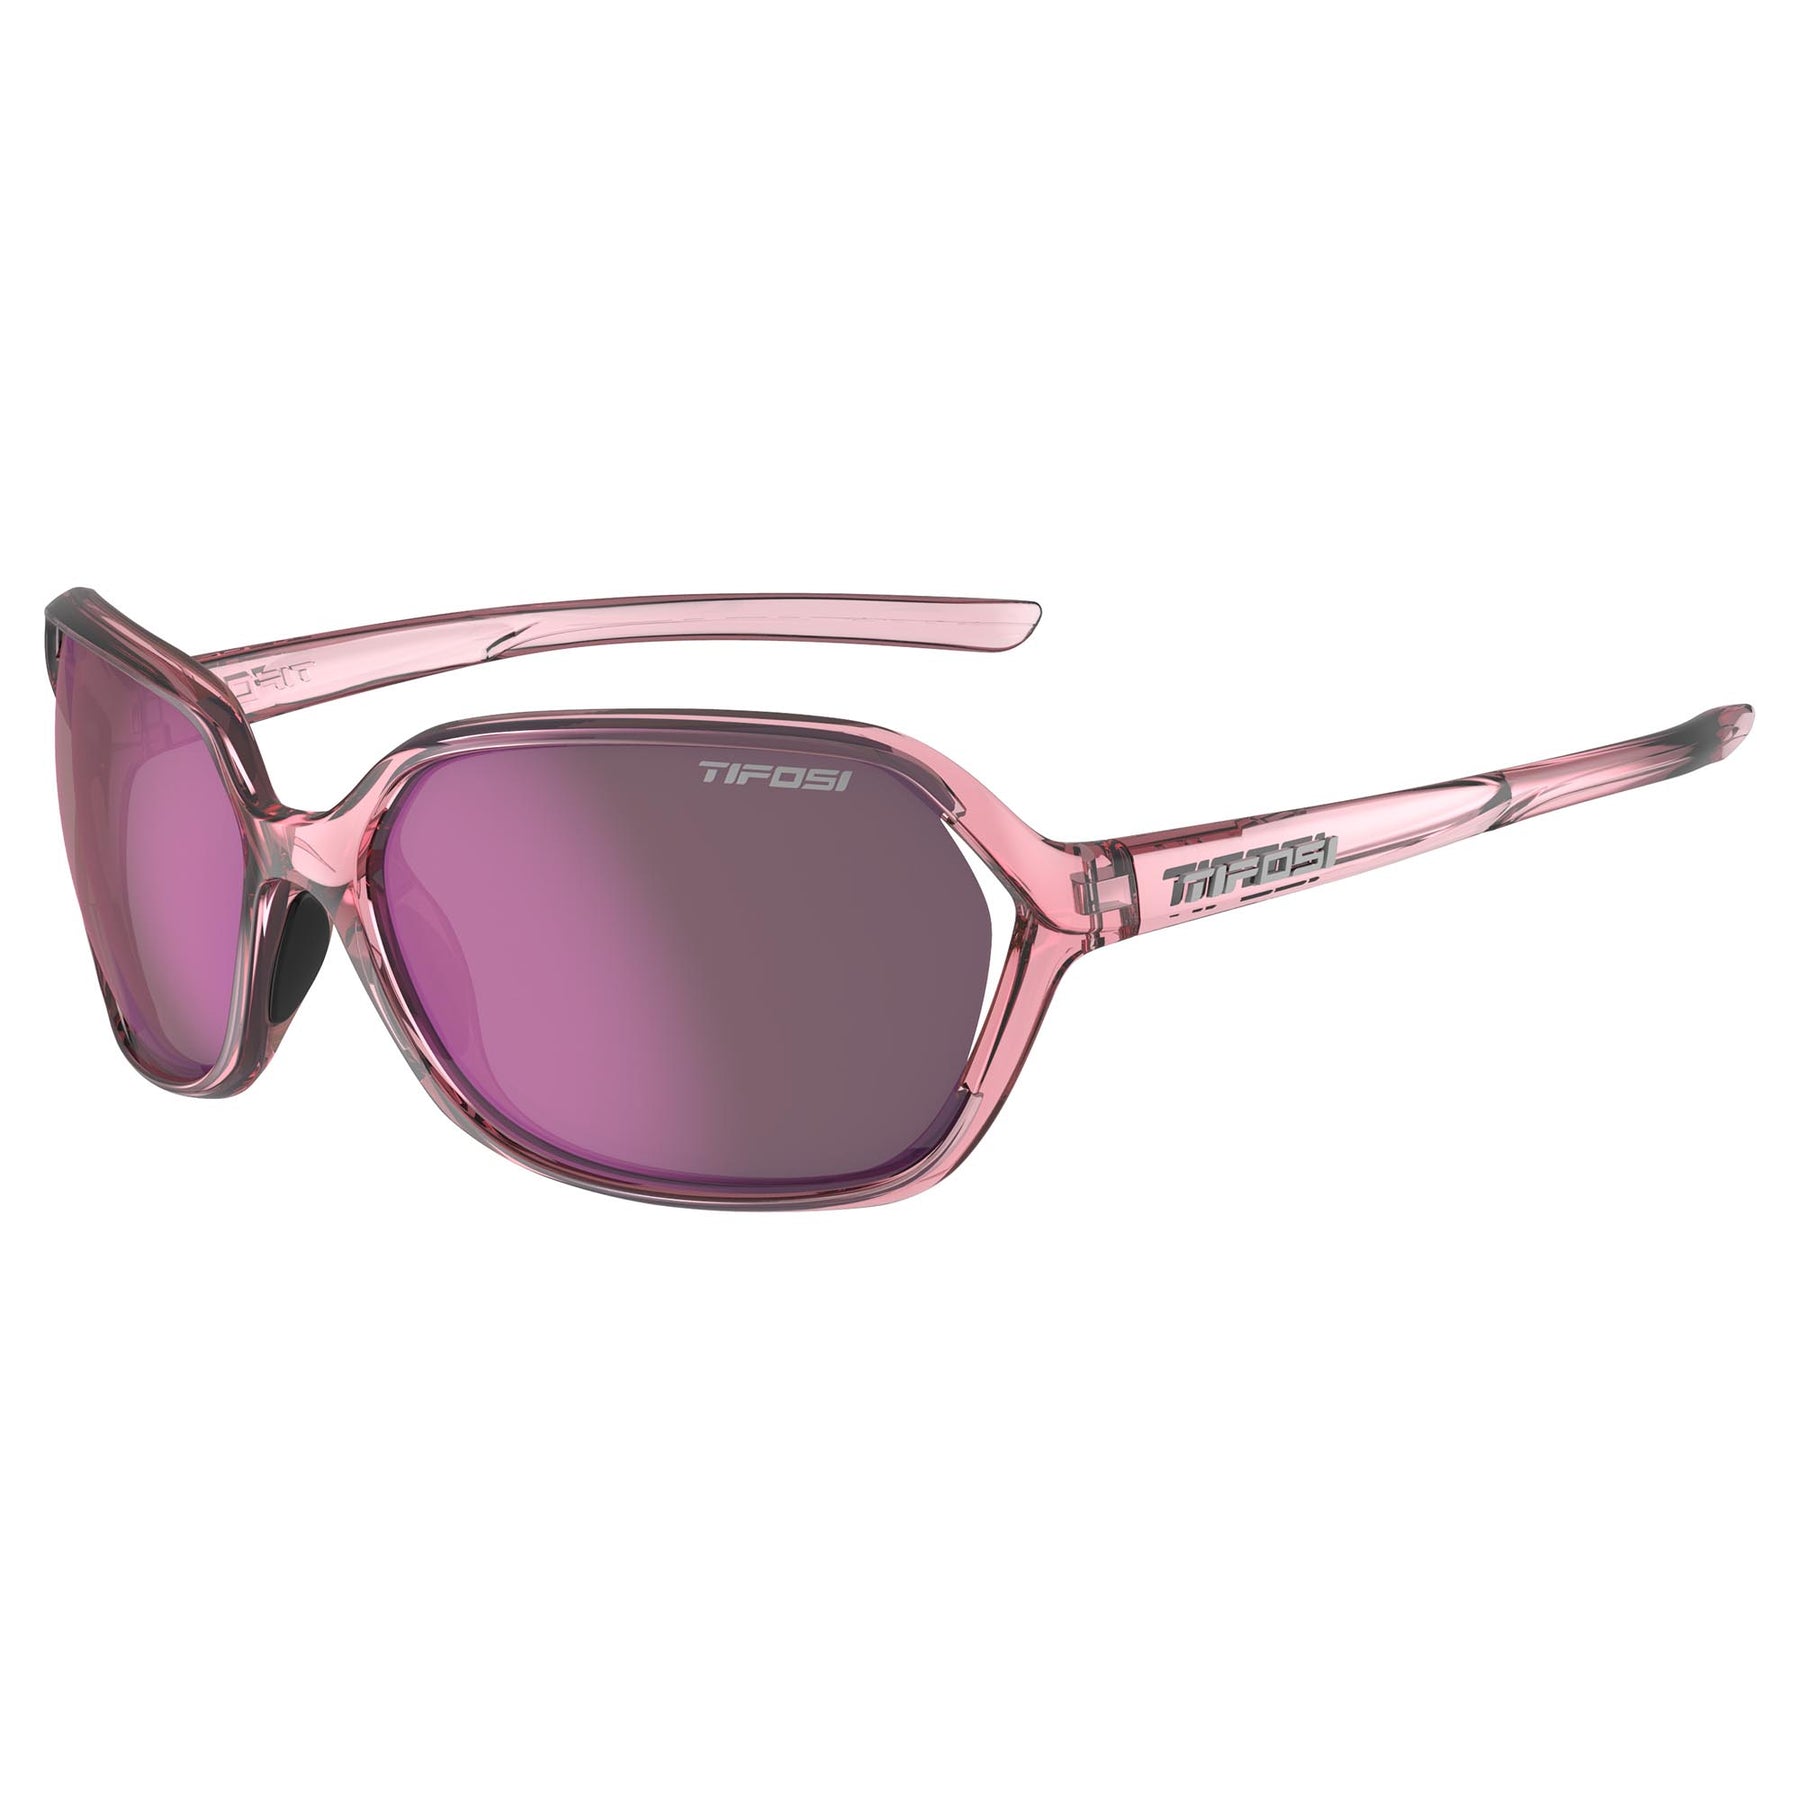 Tifosi Swoon Single Lens Sunglasses